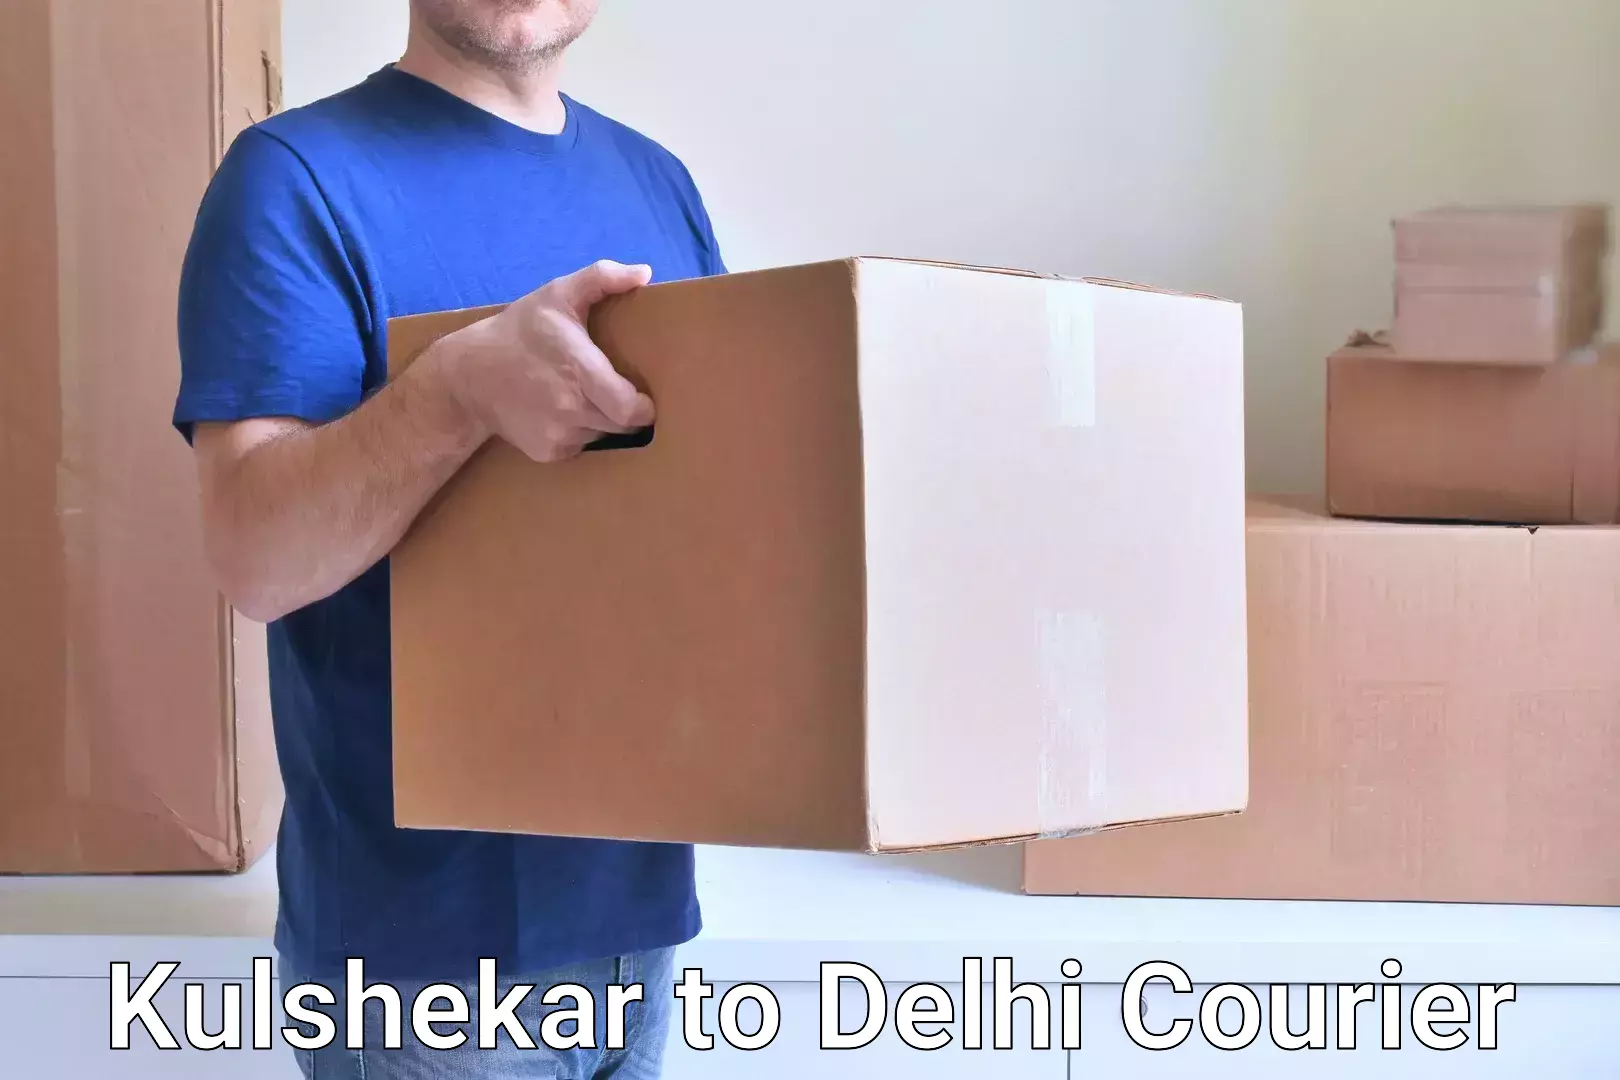 Digital courier platforms Kulshekar to Delhi